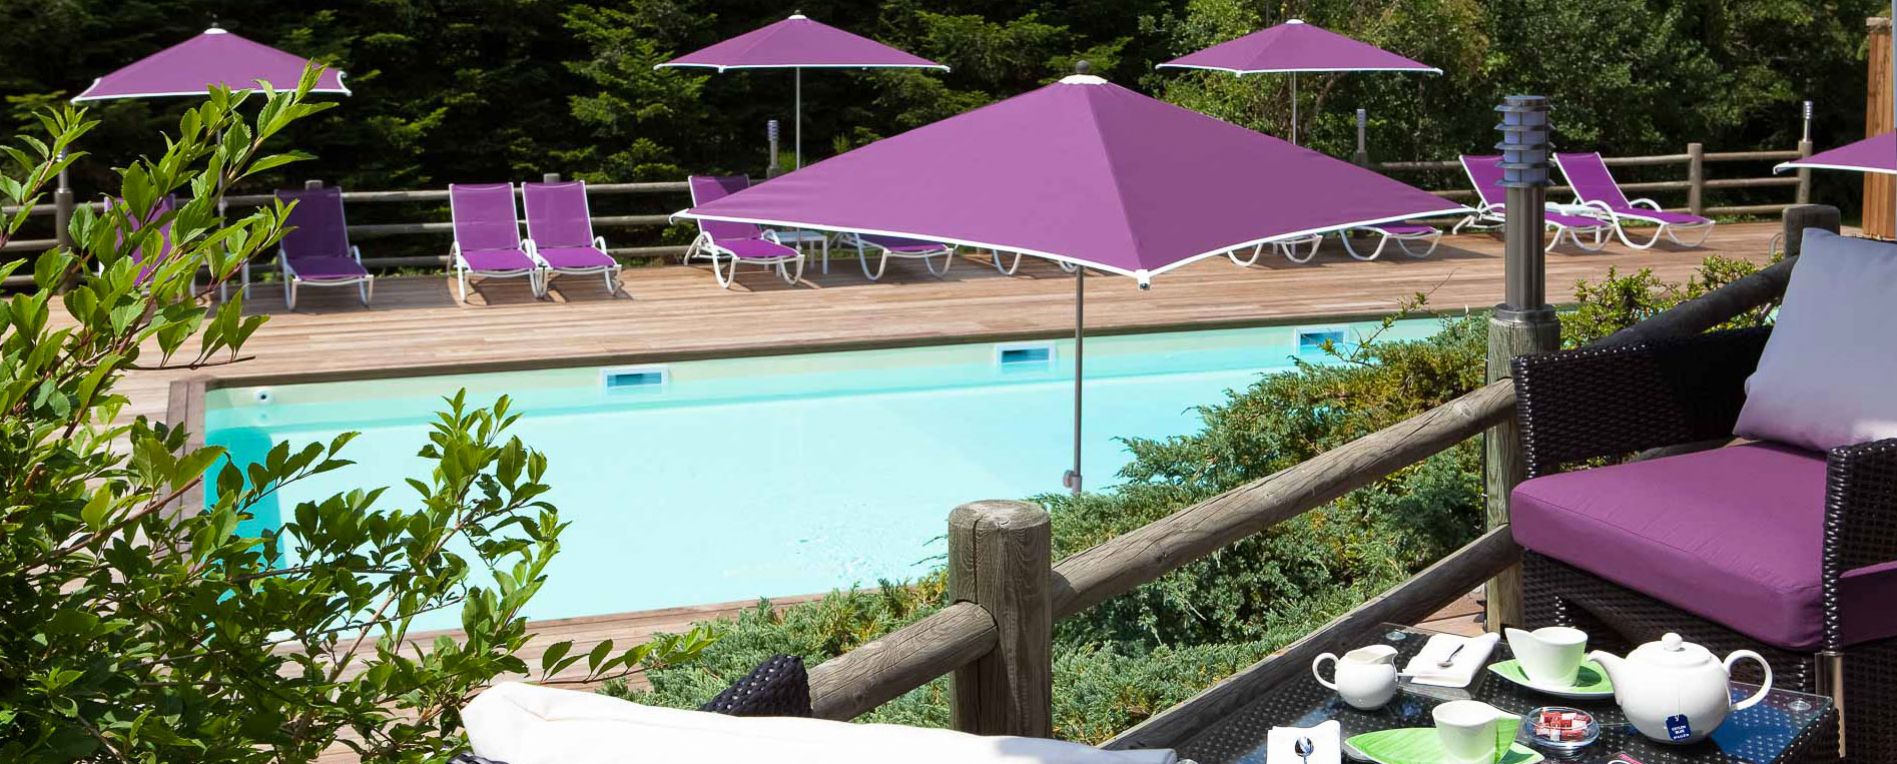 hôtel clair matin - piscine et terrasse